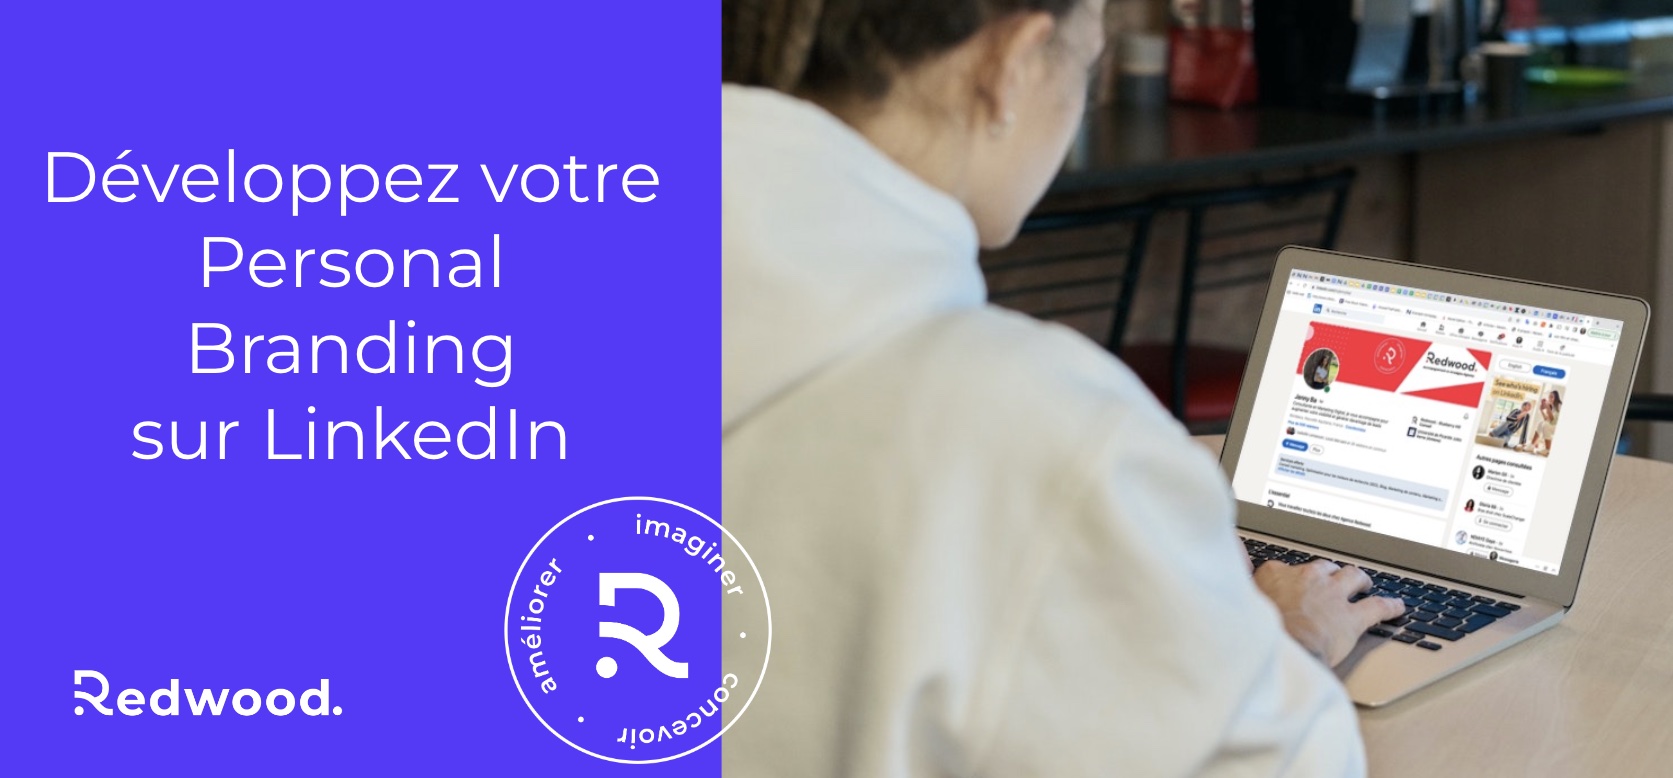 Agence Redwood - Agence conseil en communication digitale - Formation CERP Rouen